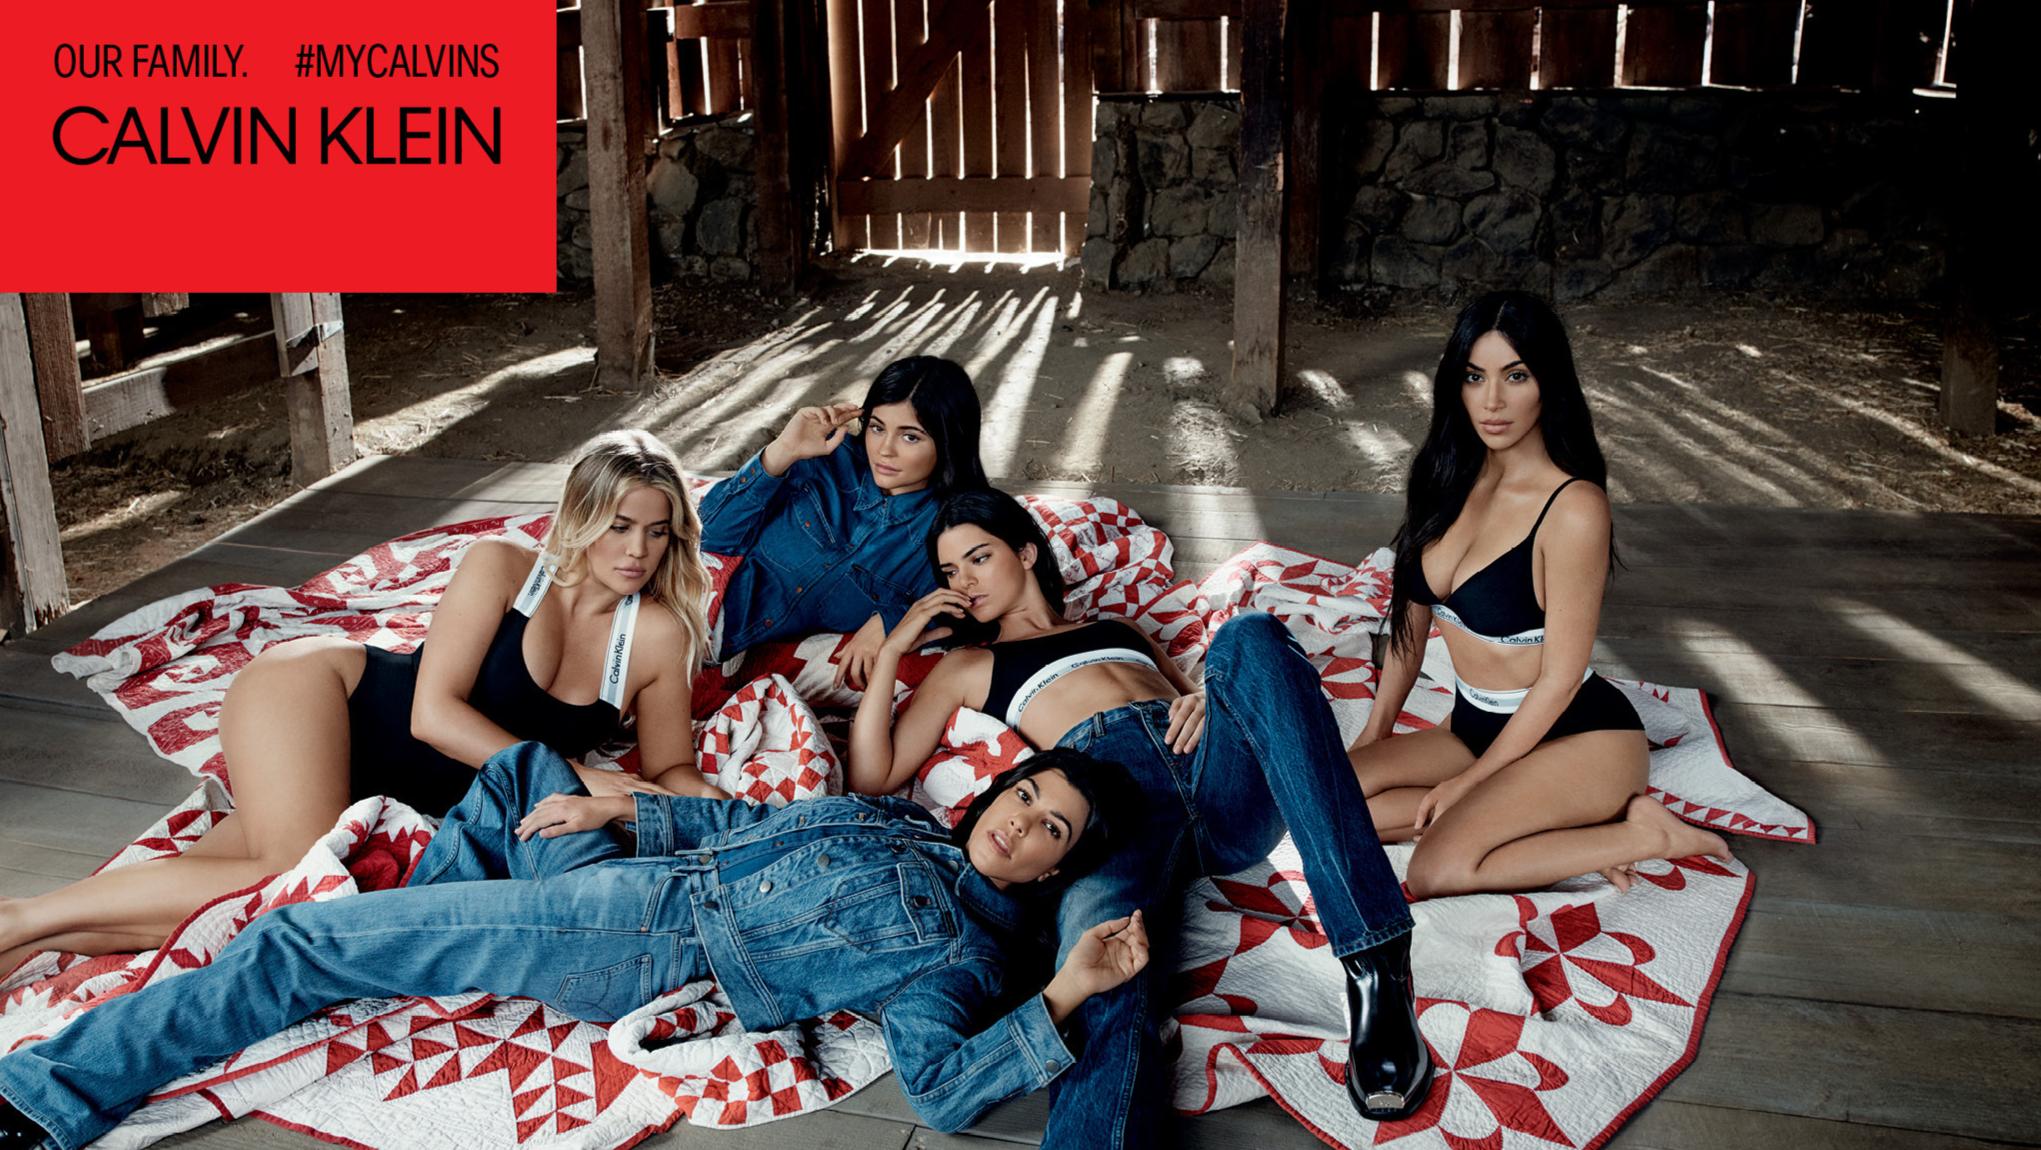 Kardashian-Jenner sisters pose for Calvin Klein photo shoot